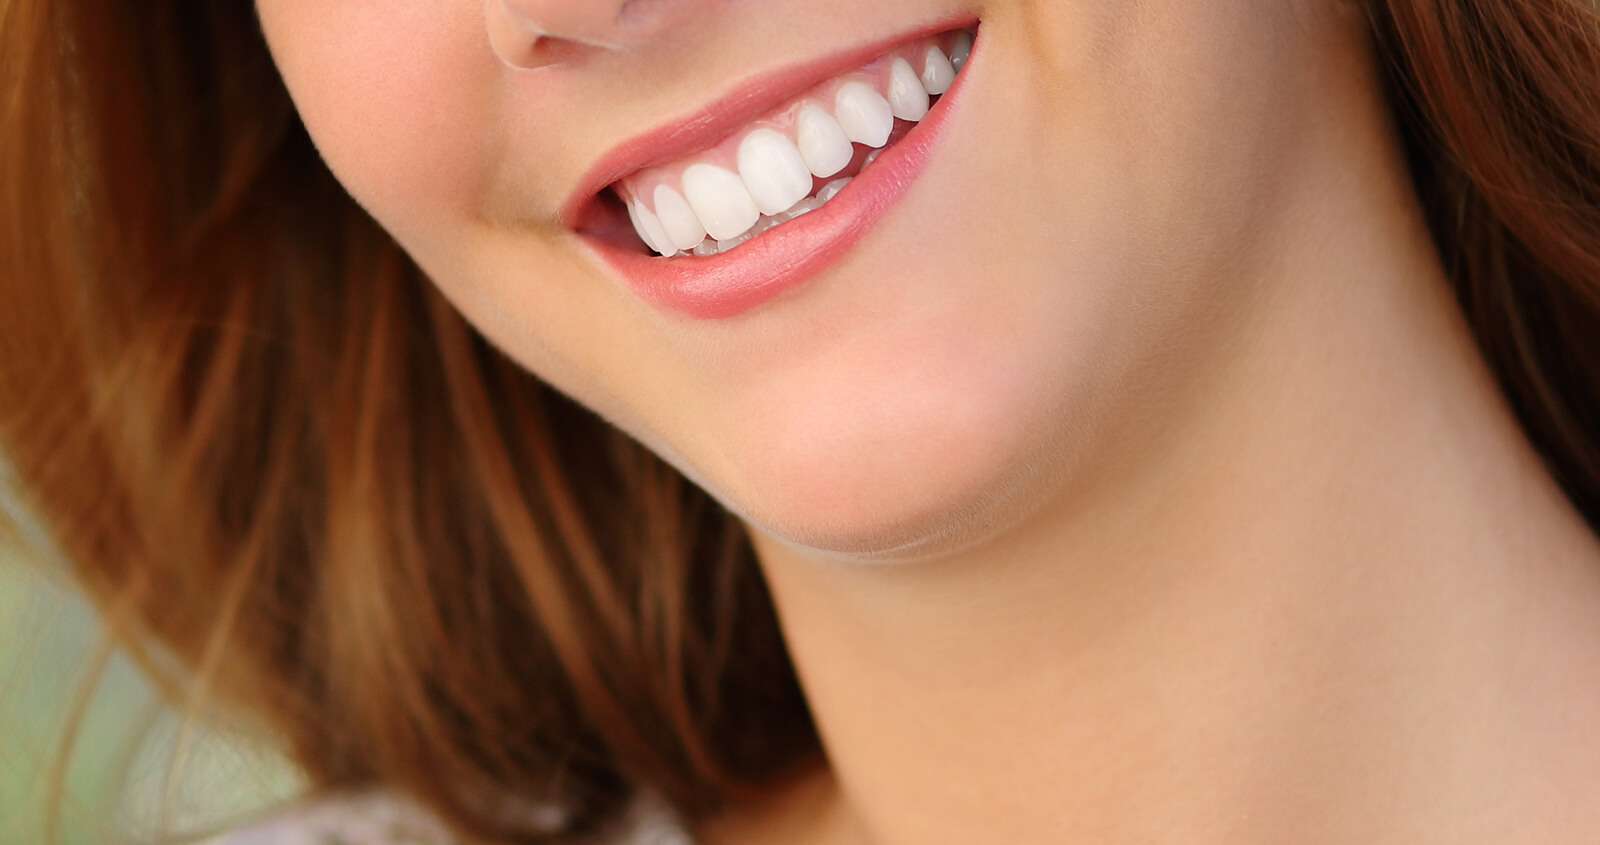 Overland Park dentist provides professional teeth whitening